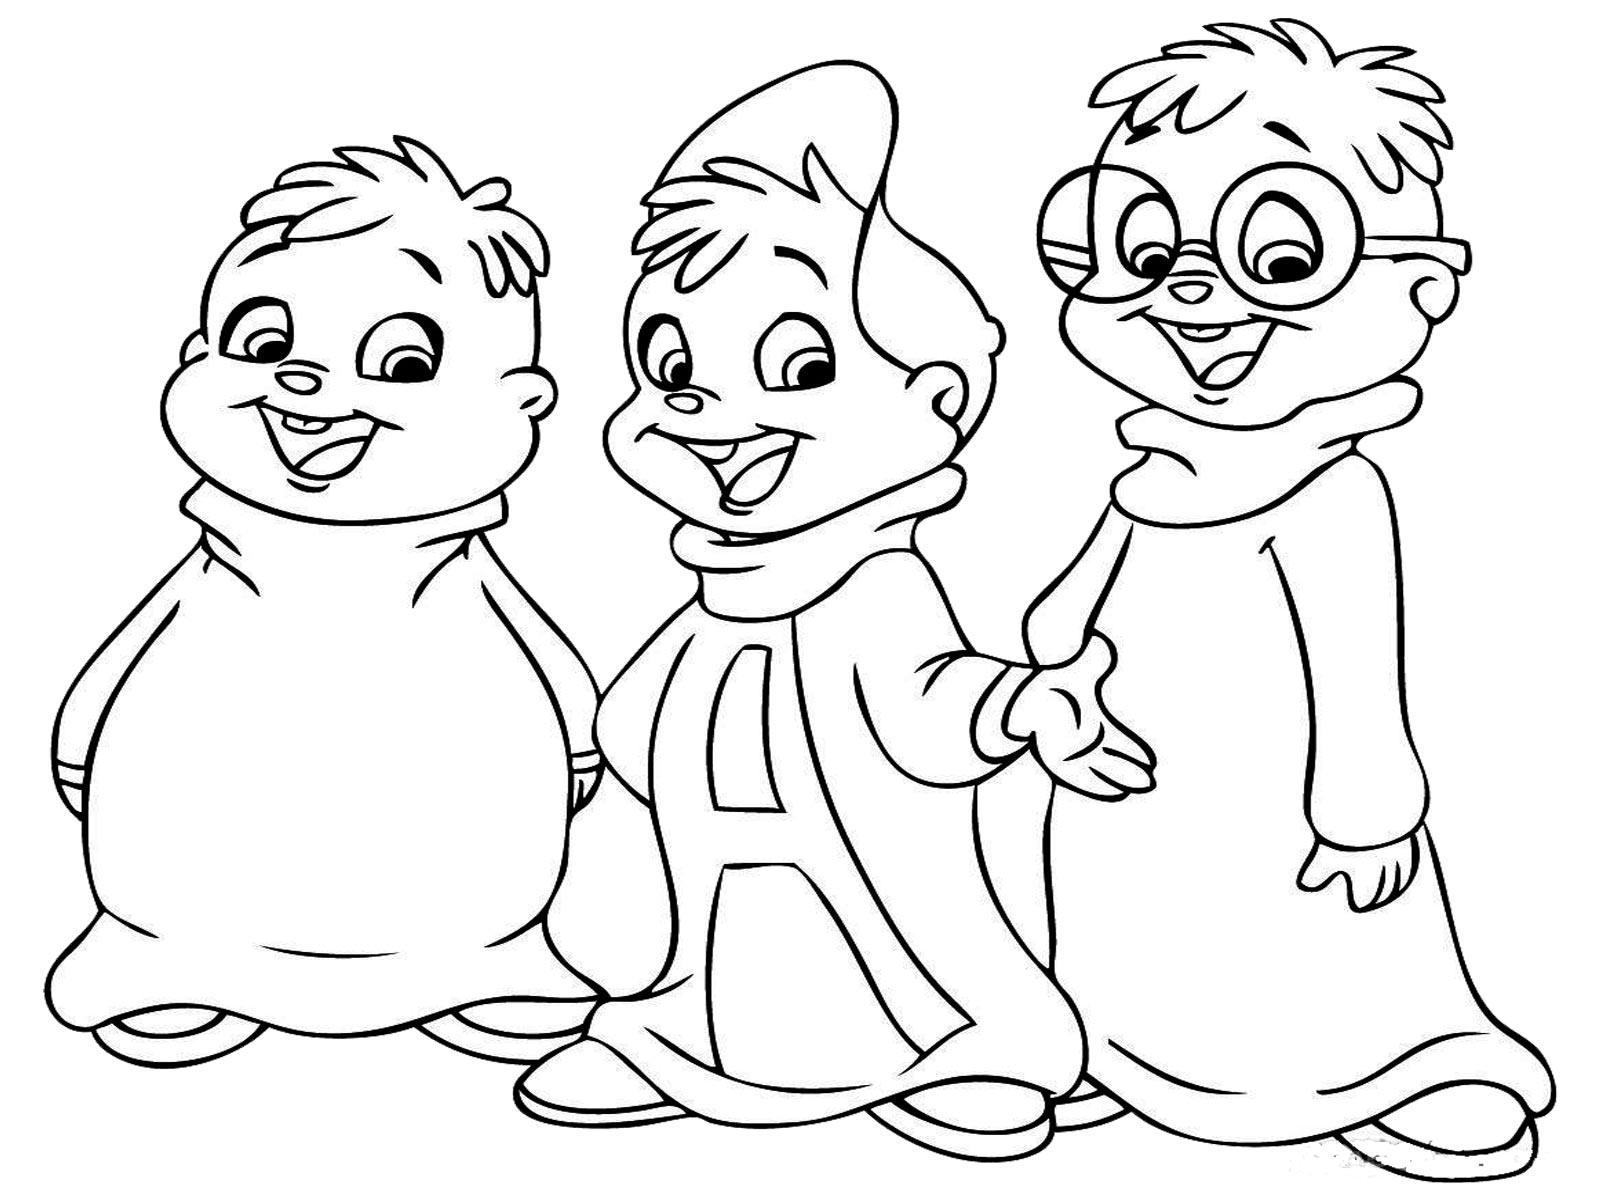 Dibujos De Alvin And The Chipmunks 128304 Pel culas De Animaci n 